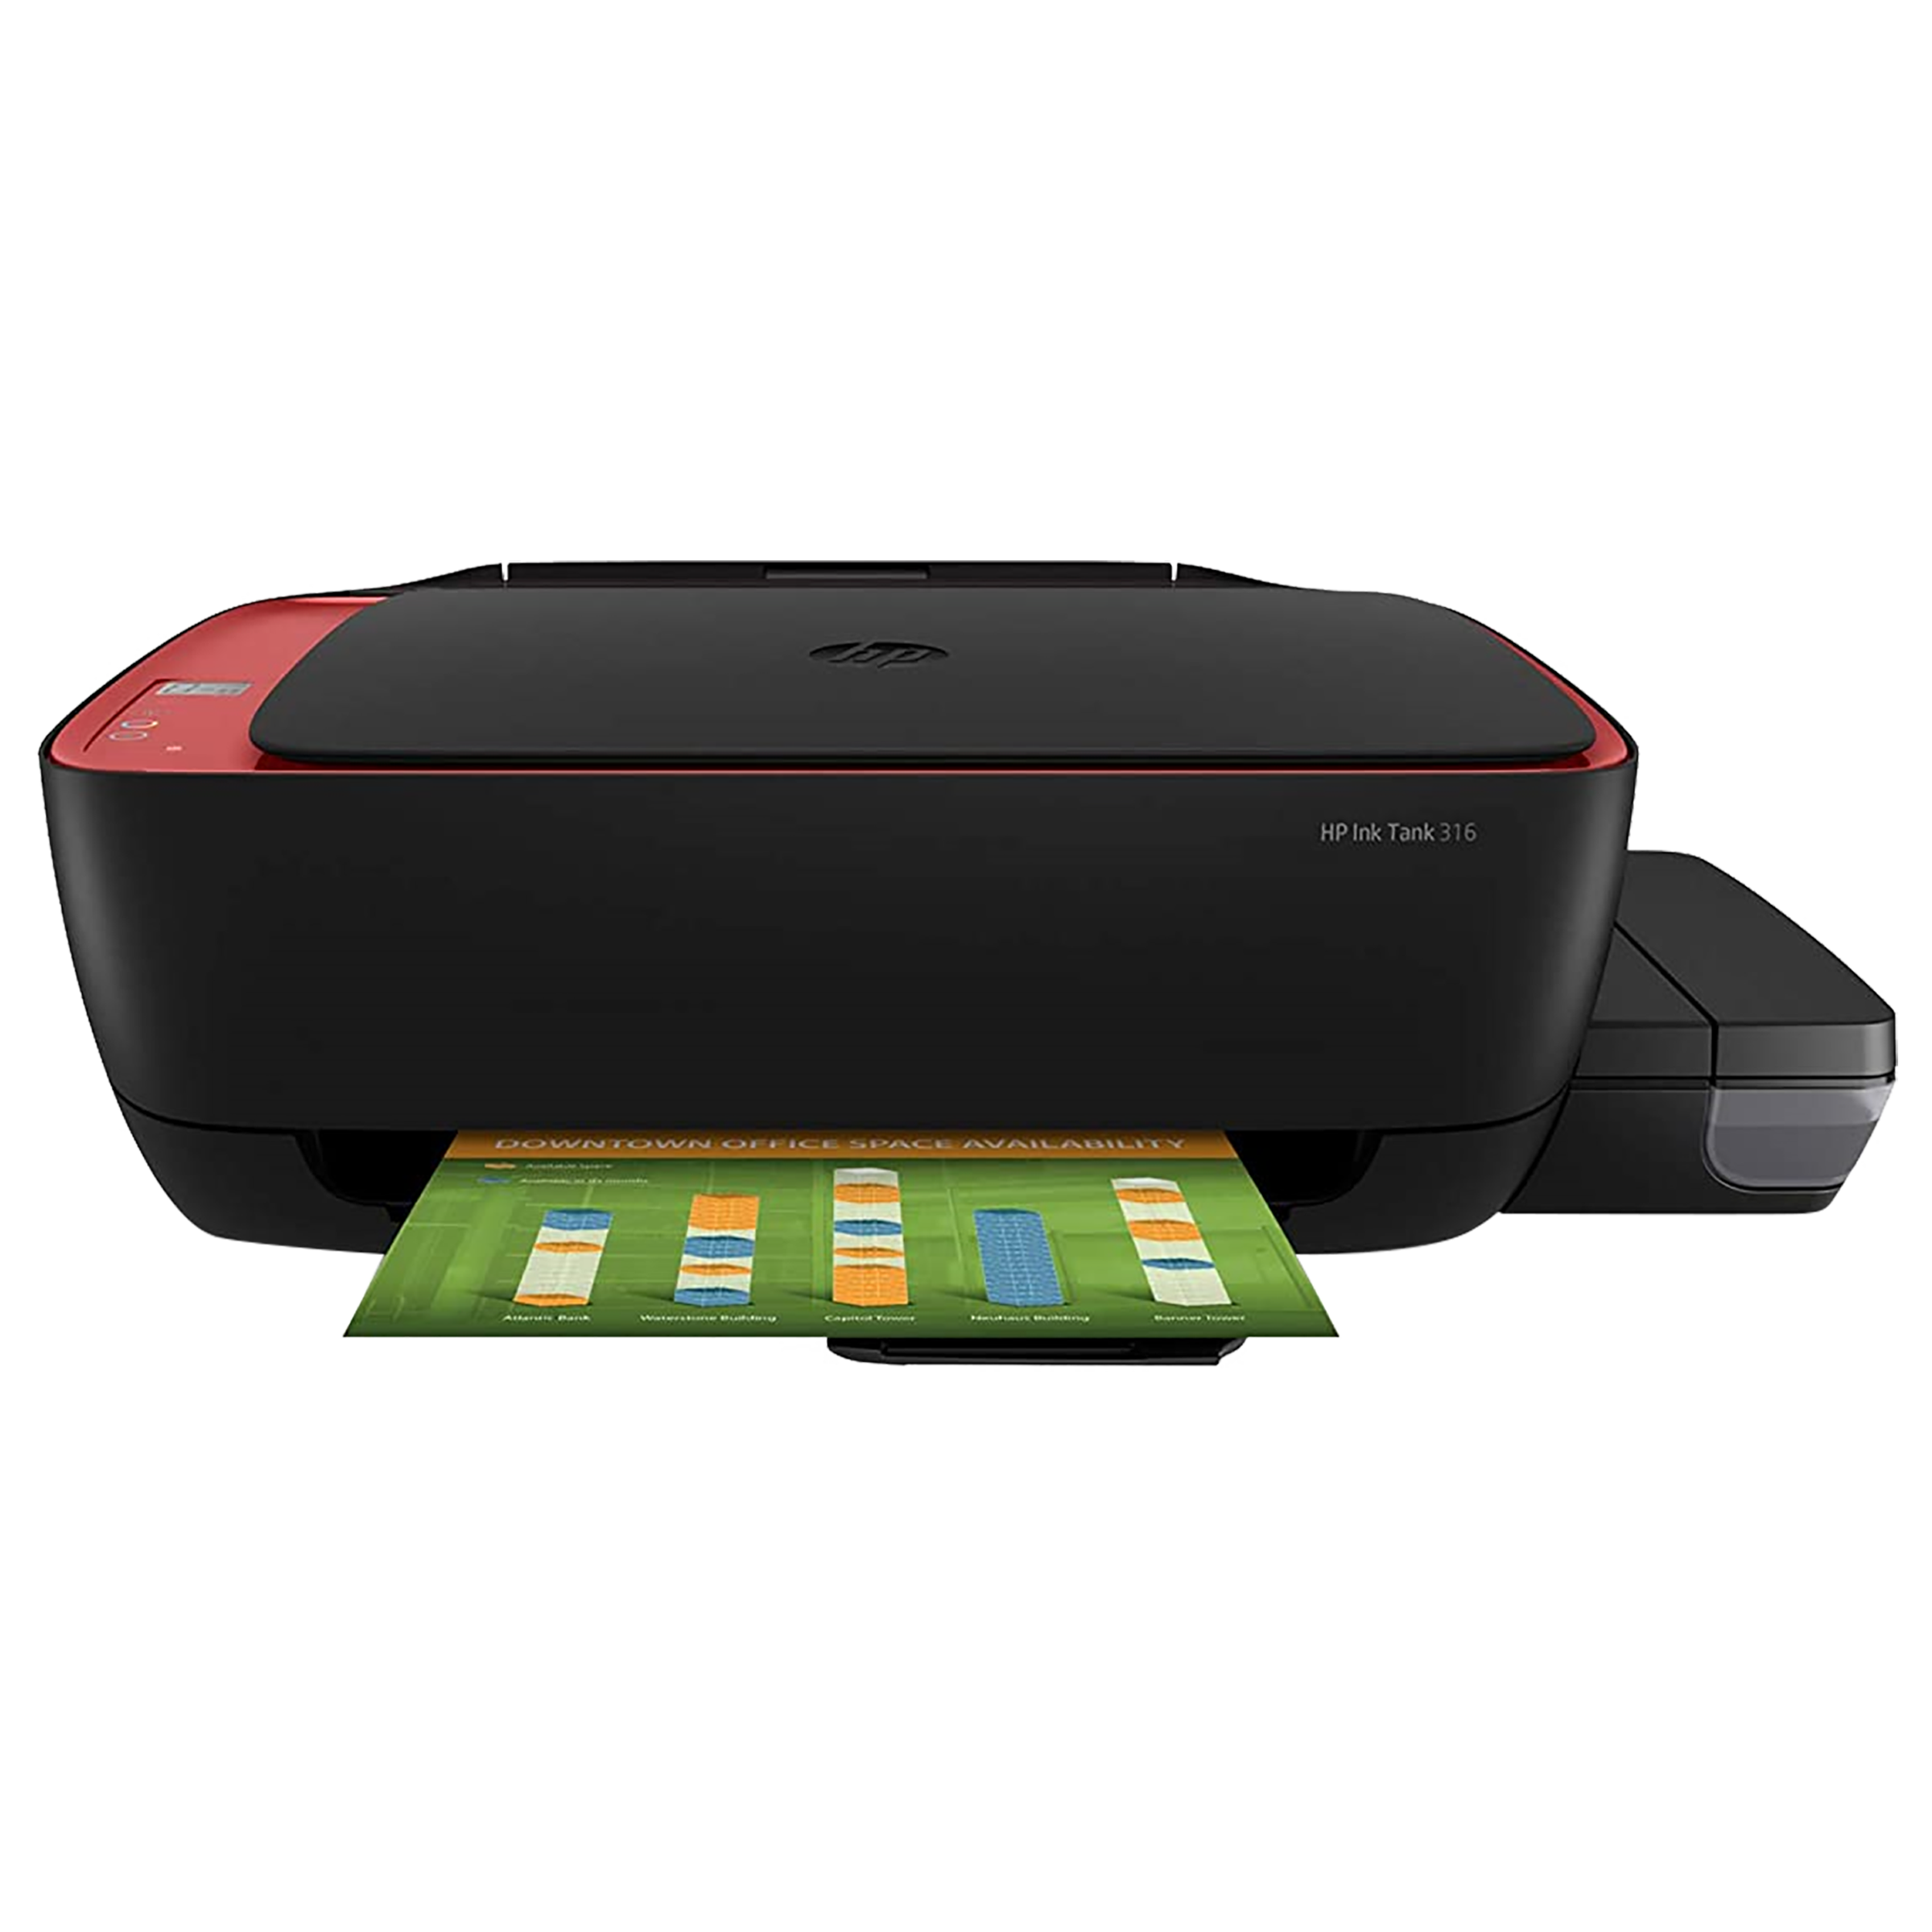 HP Inktank 316 Color Multi-Function Inkjet Printer (Hassle-Free Ink Management, Black/Red)_1